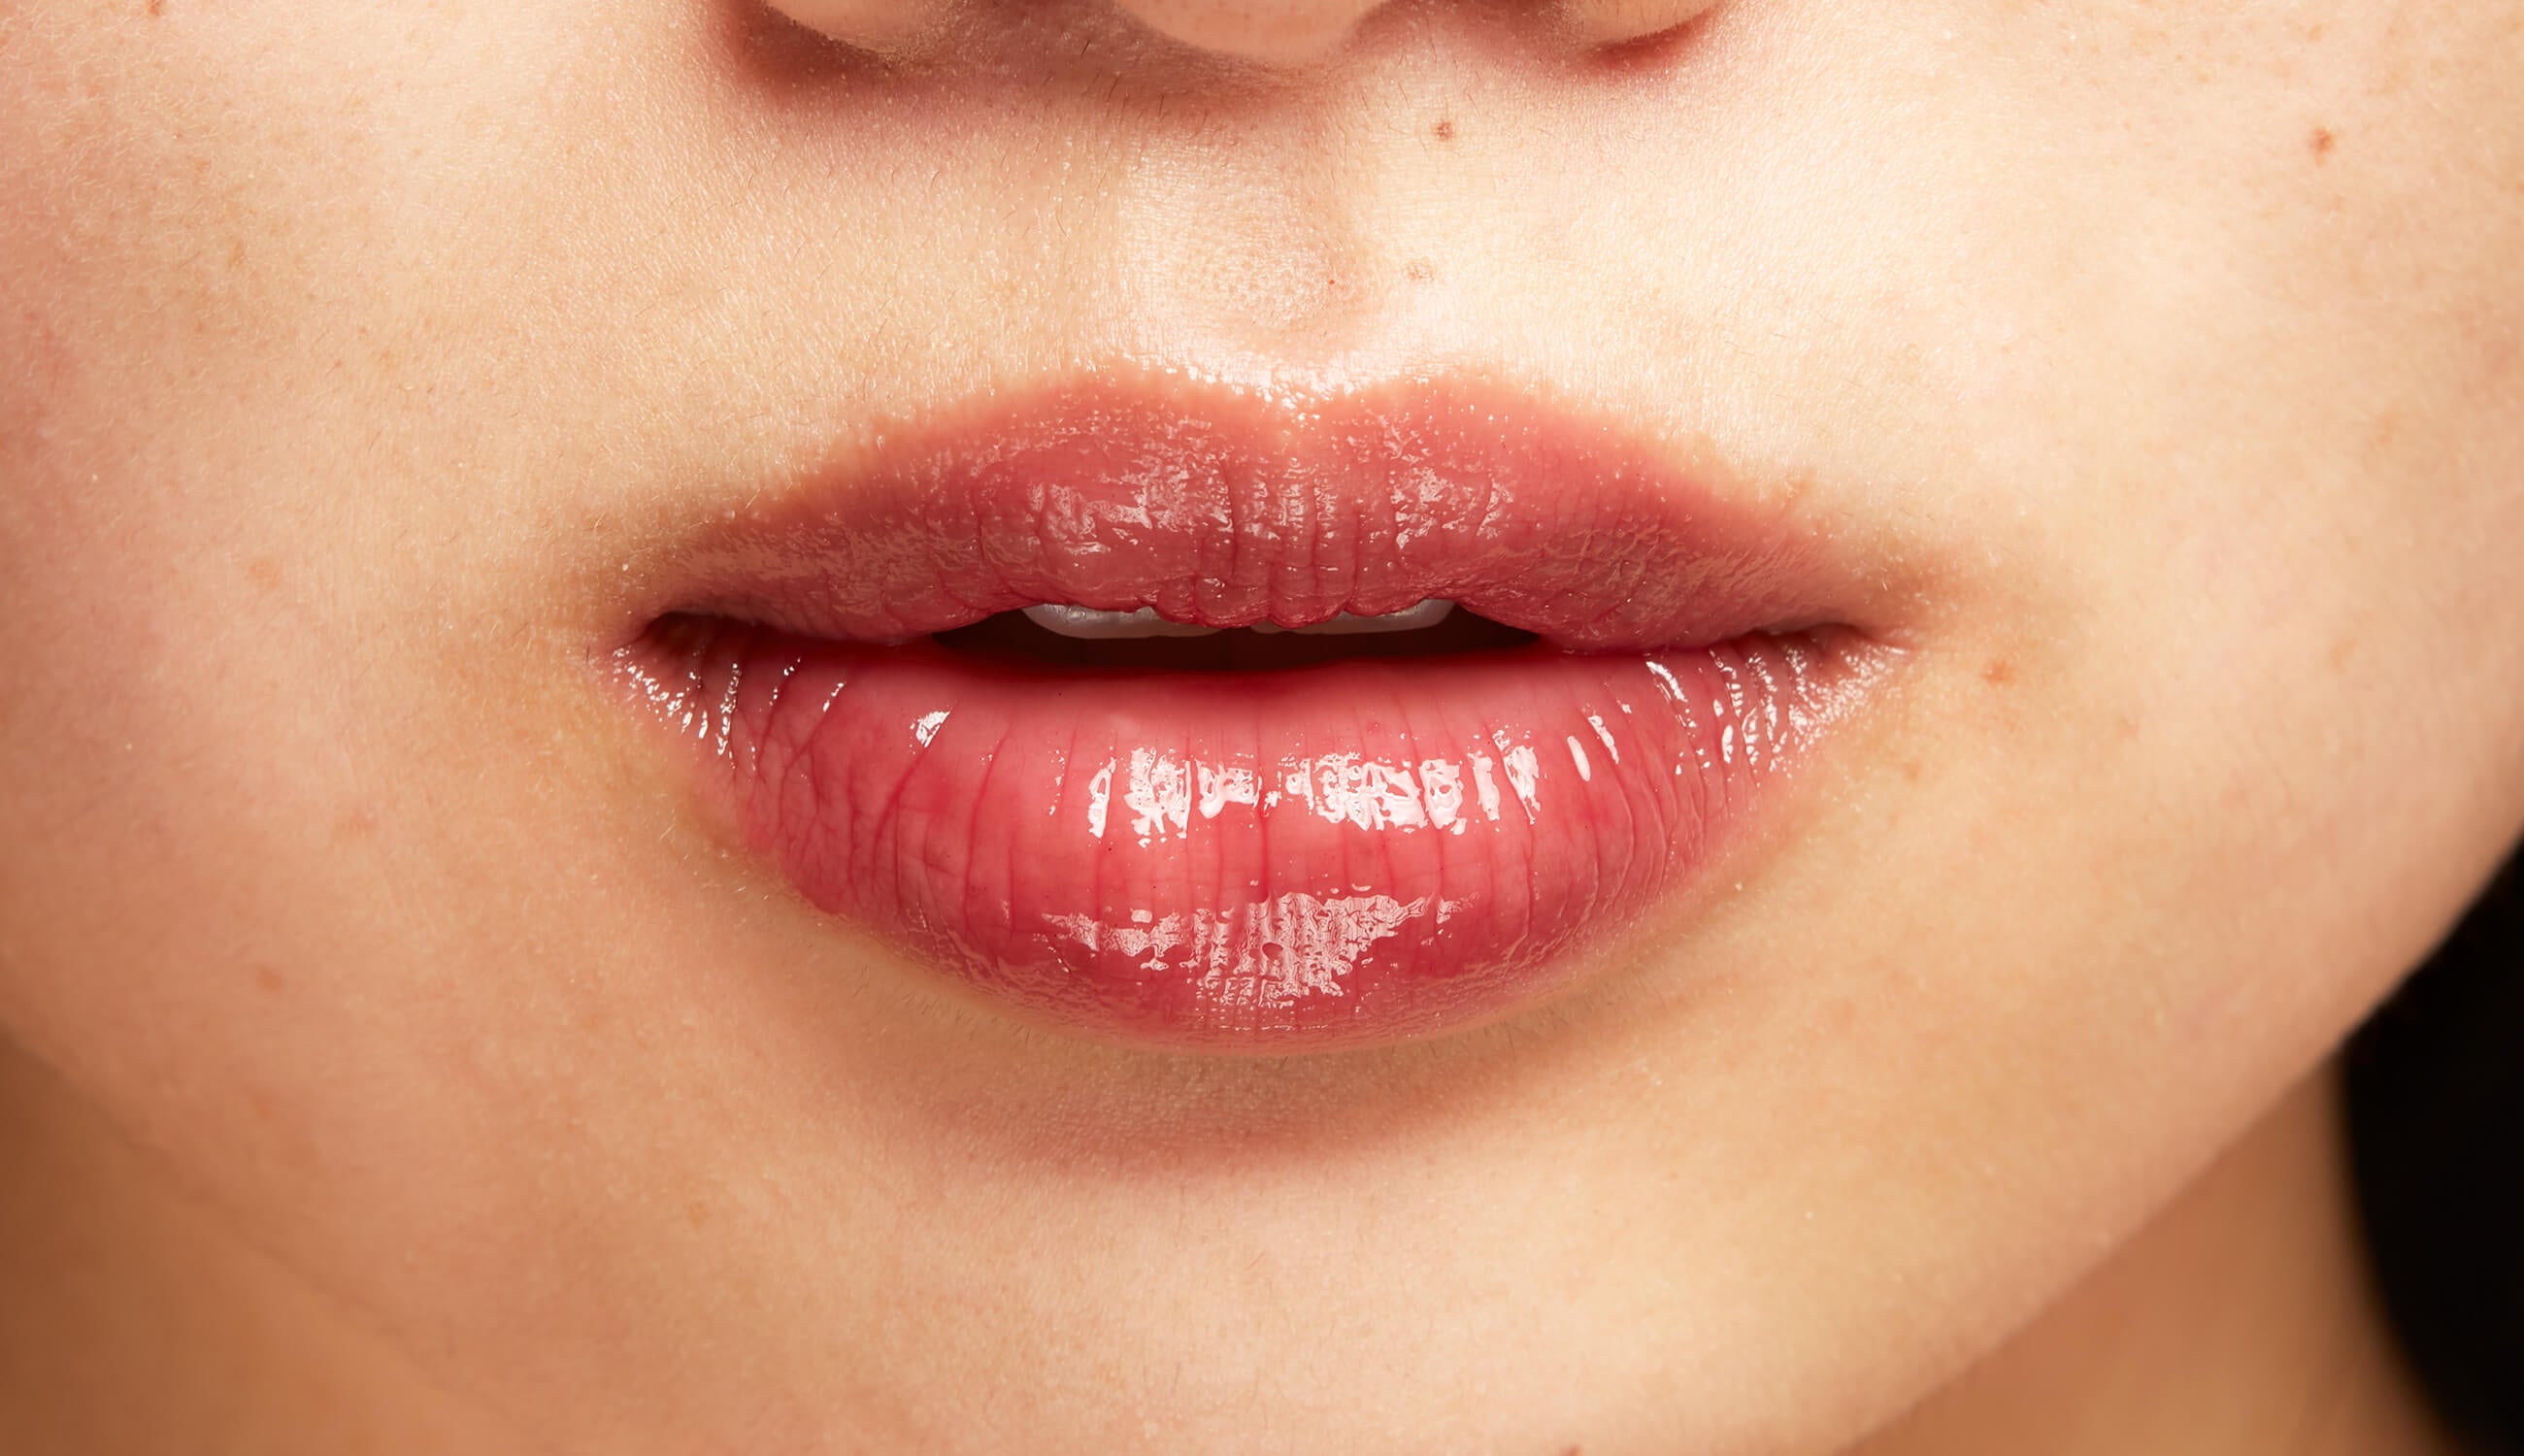 Lips applying rich, glossy lipstick color